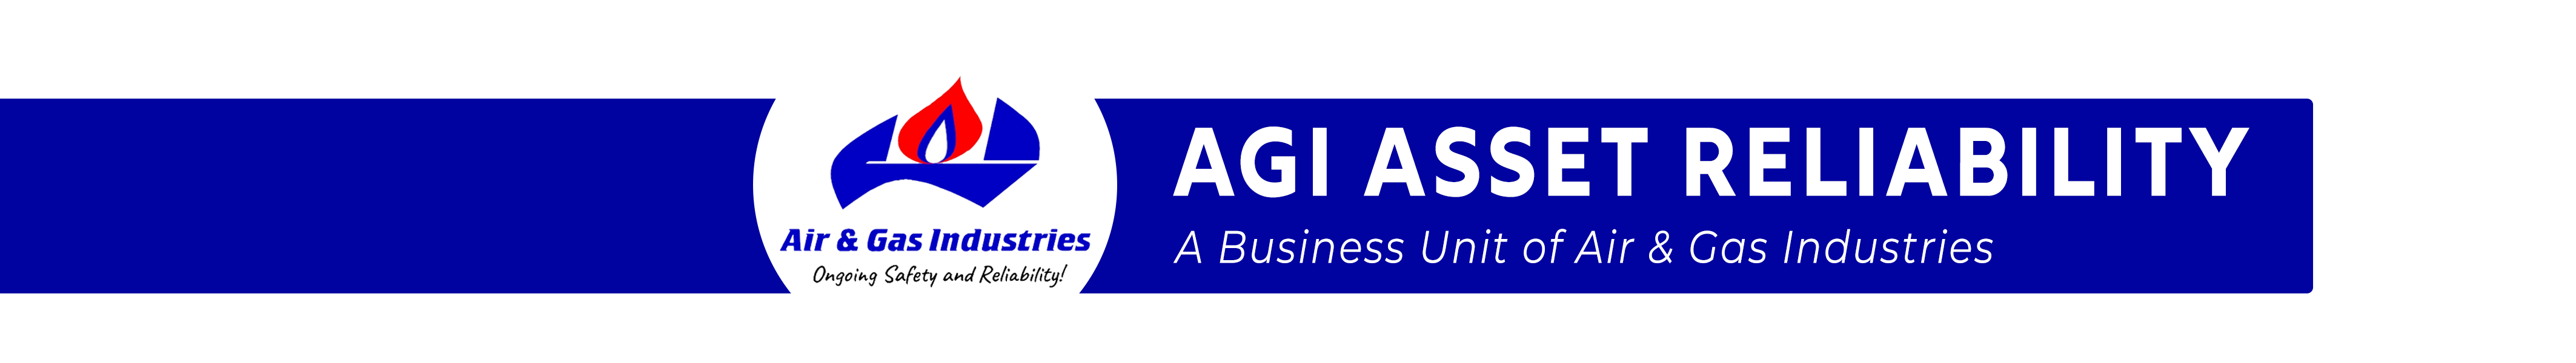 AGI Asset Reliability